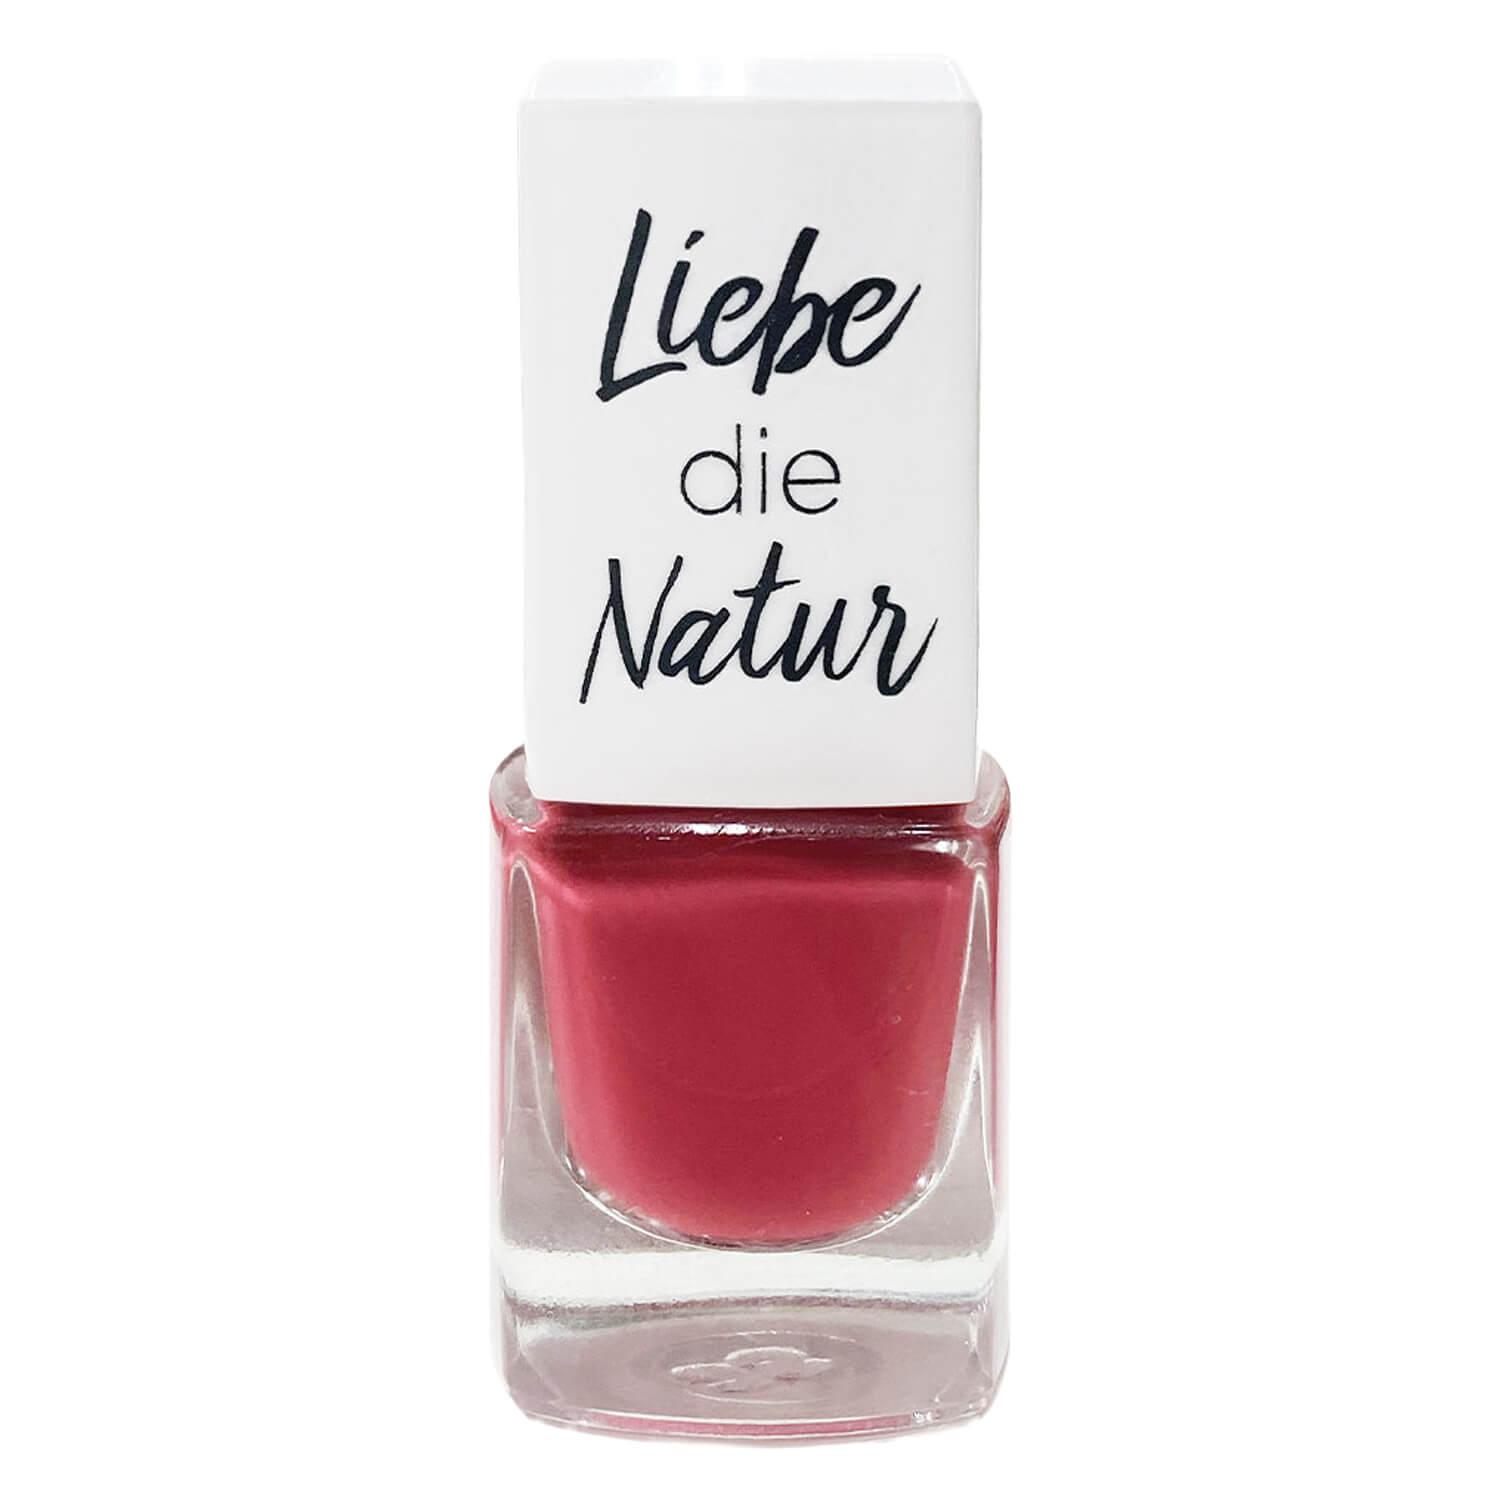 Liebe die Natur - Natural Nail Polish very berry